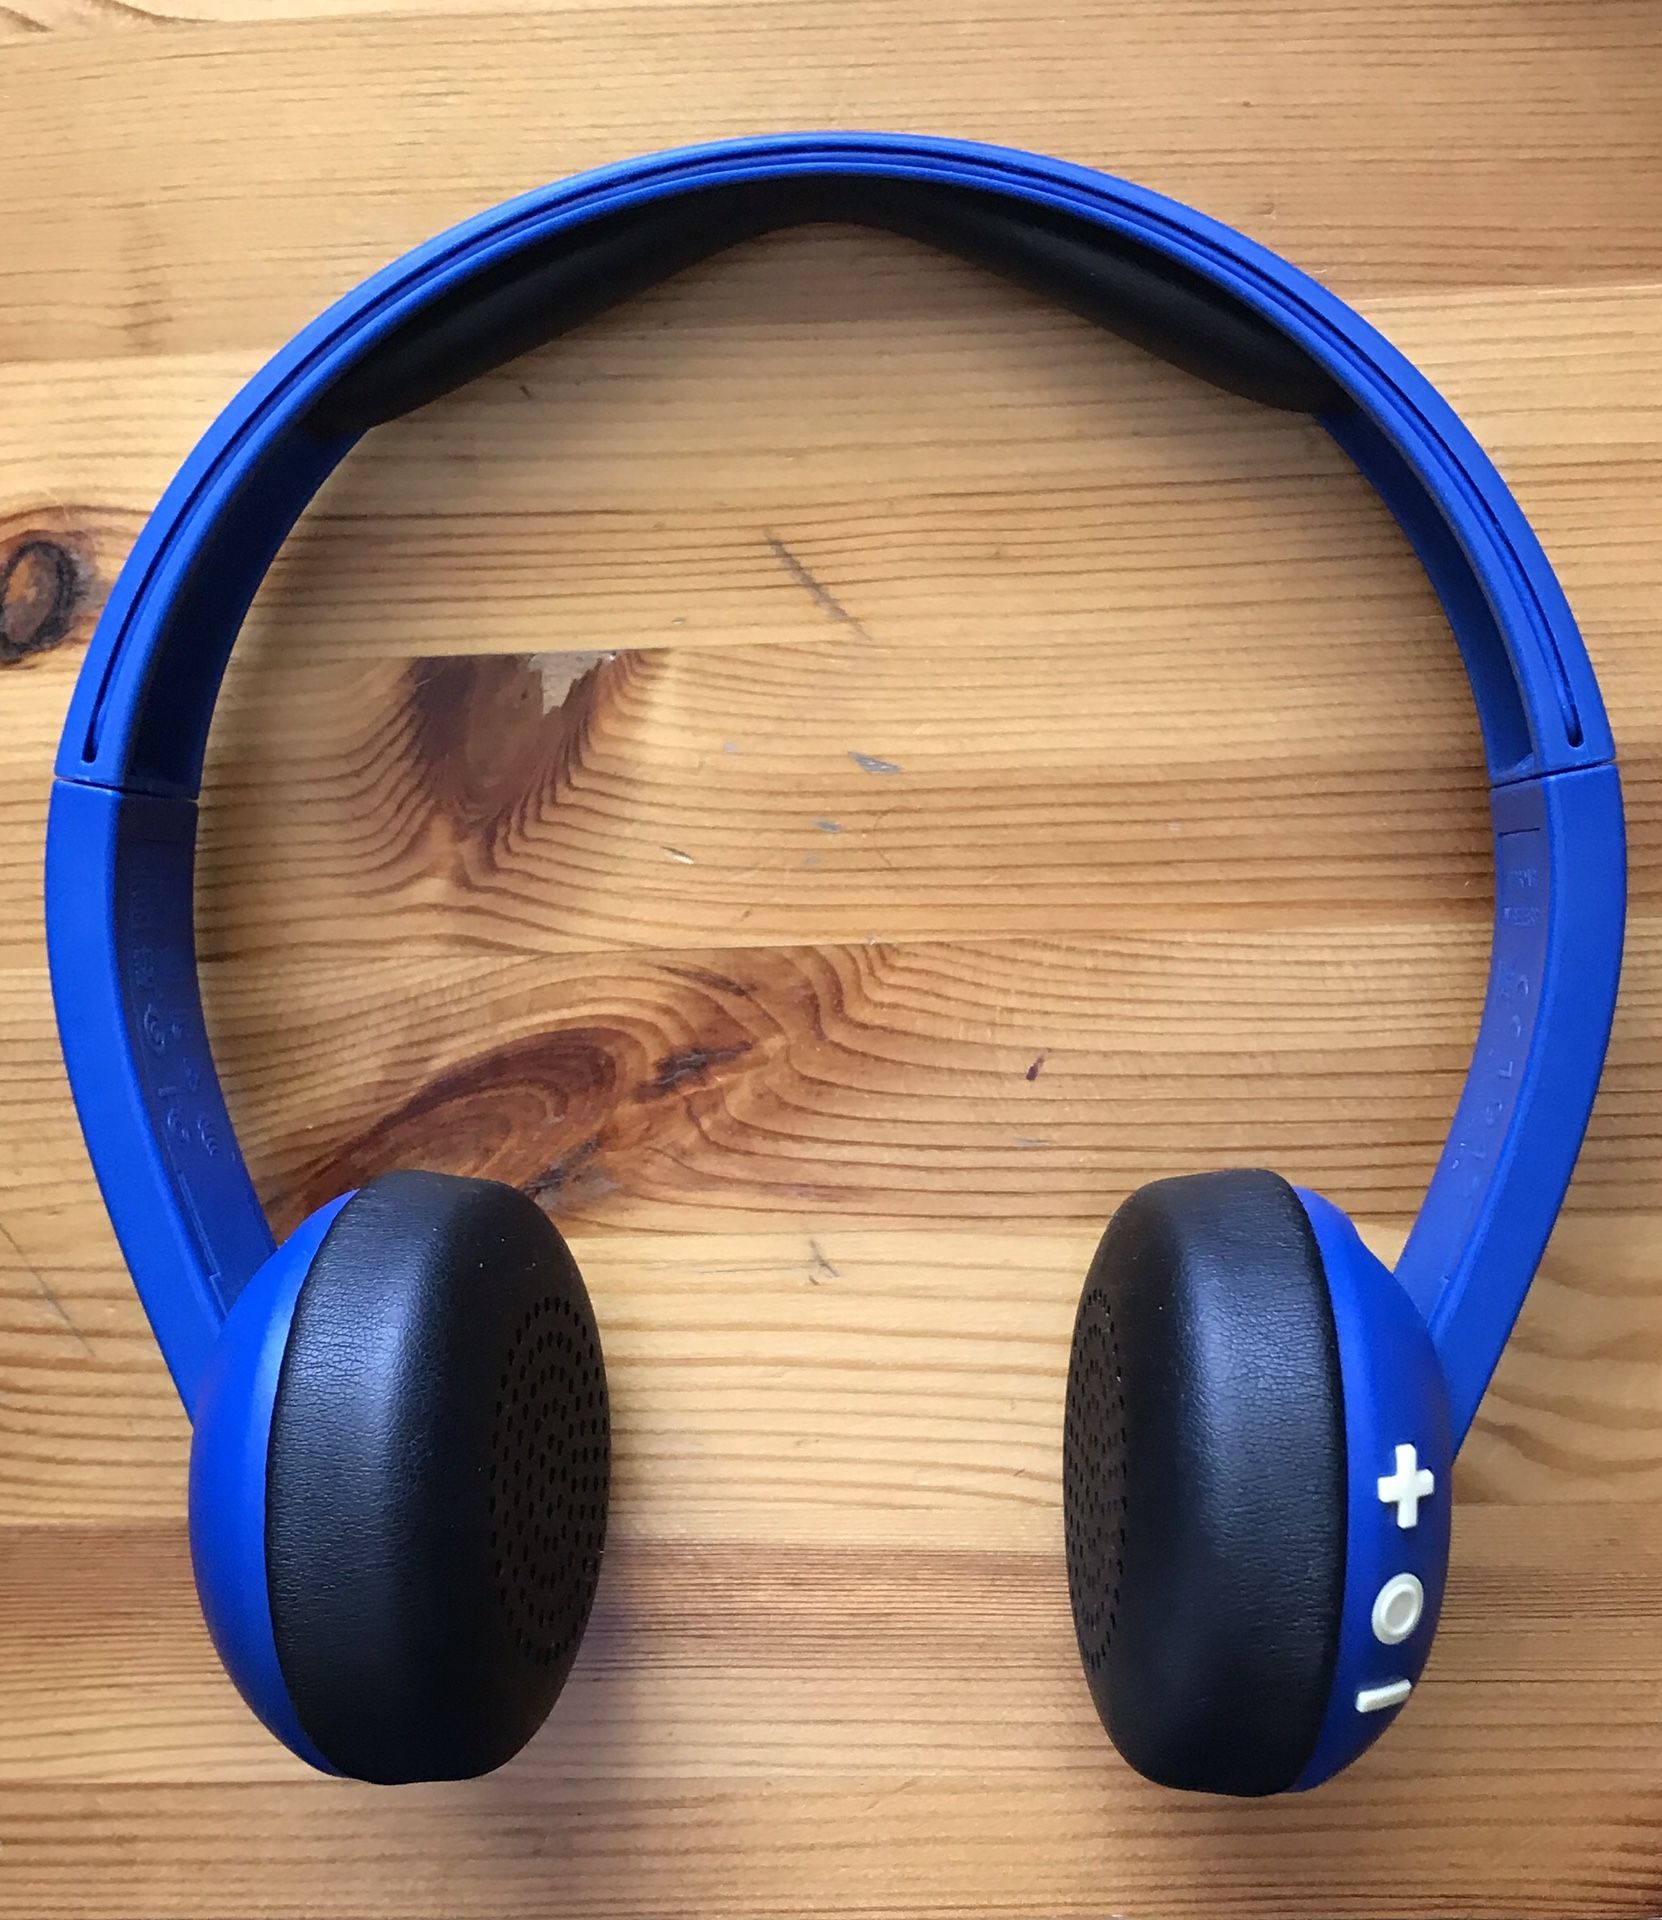 SKULLCANDY uproar Bluetooth wireless headphones